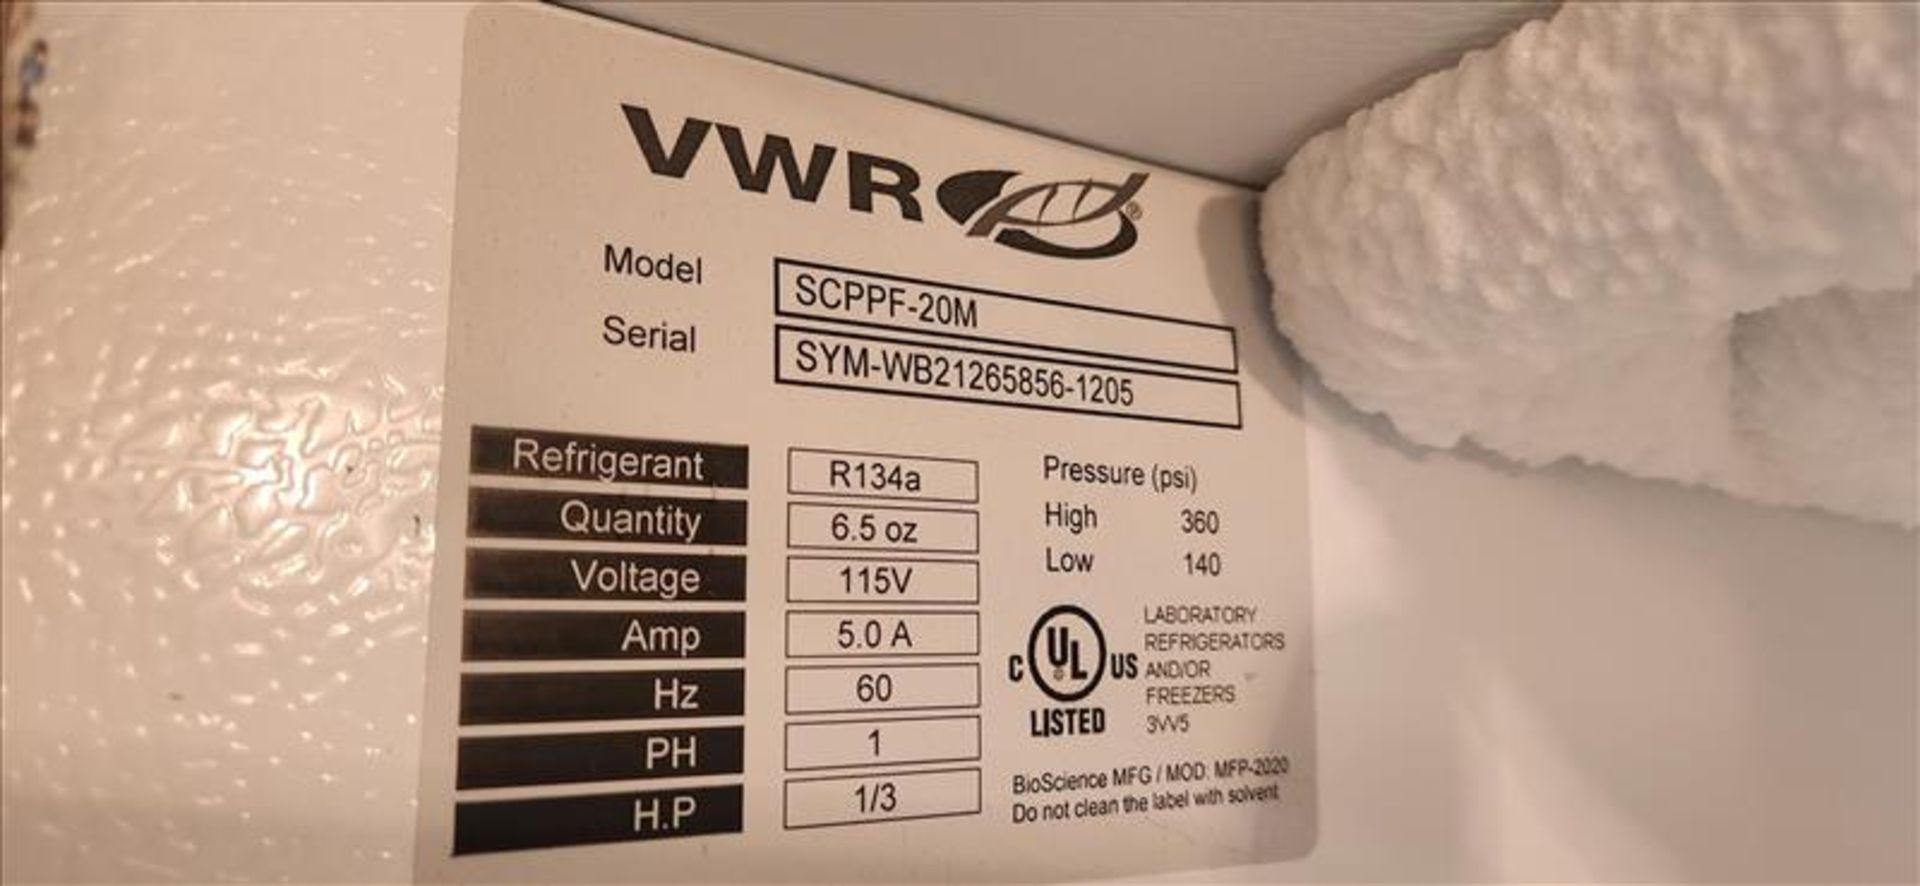 VWR Isotemp Freezer mod. SCPPF-20M, S/N SYM-WB21265856-1205 - Image 3 of 3